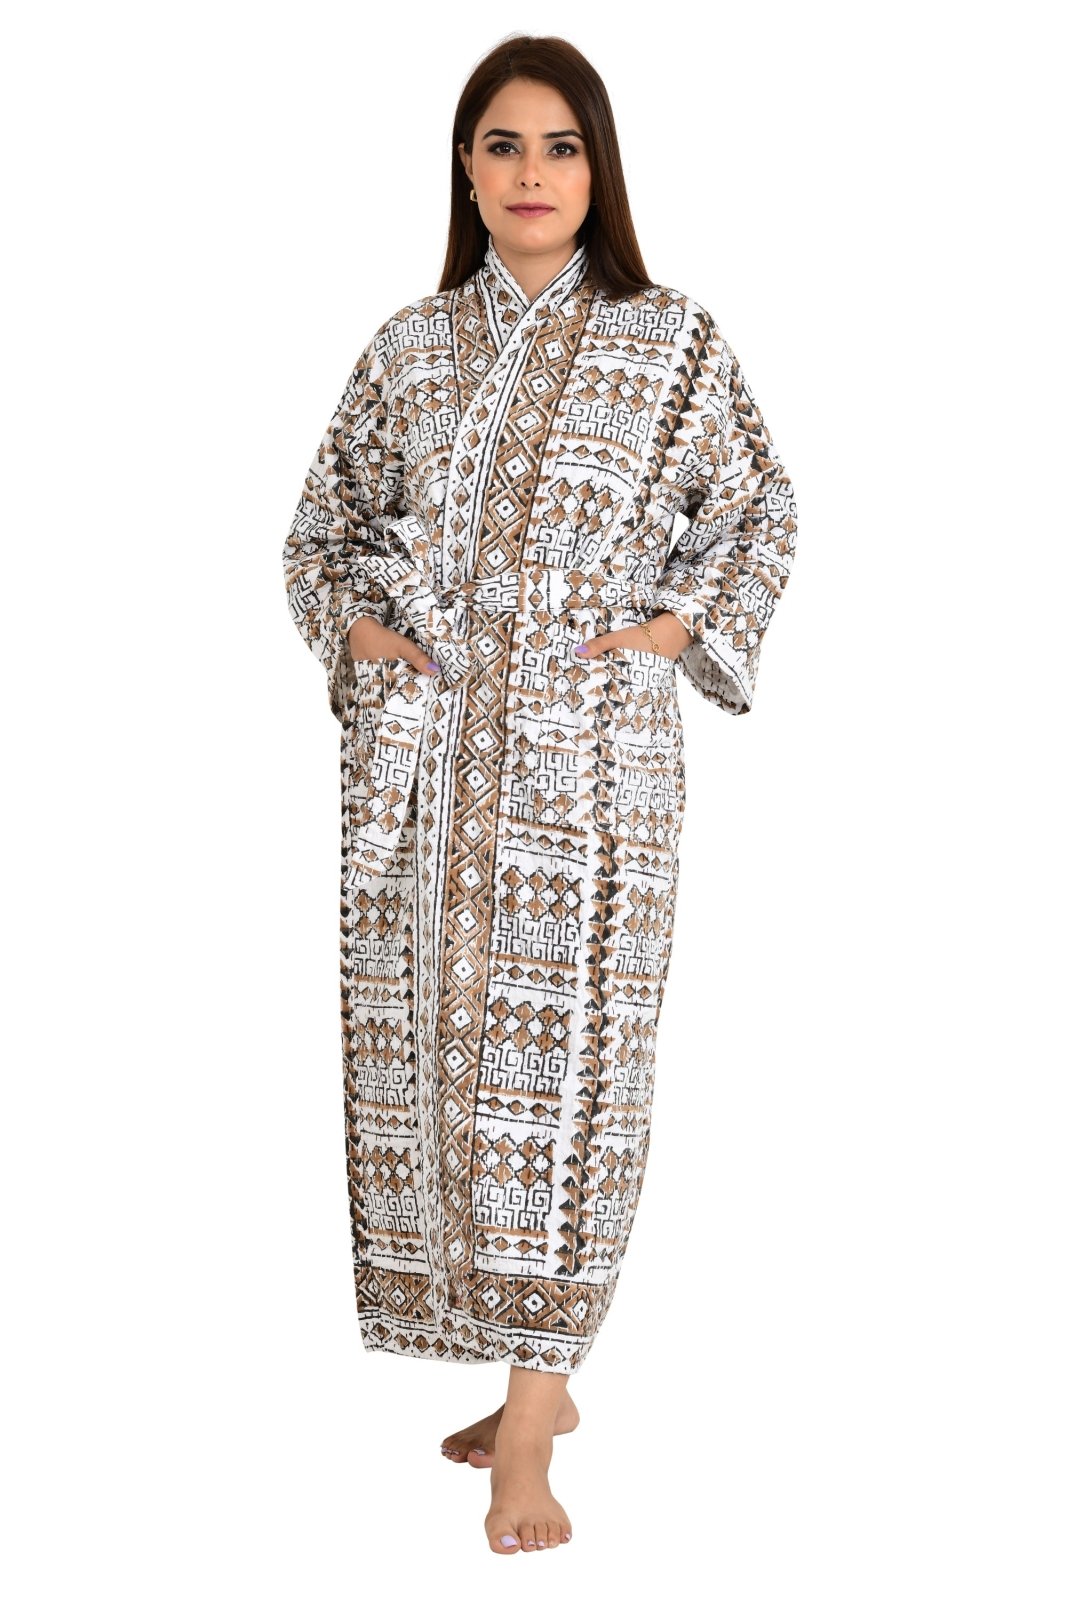 Kantha Stitch 100% Cotton Reversible Long Kimono Women Jacket | Handmade Stitch Robe | Unisex Gift | White Brown Geometric Pattern - The Eastern Loom